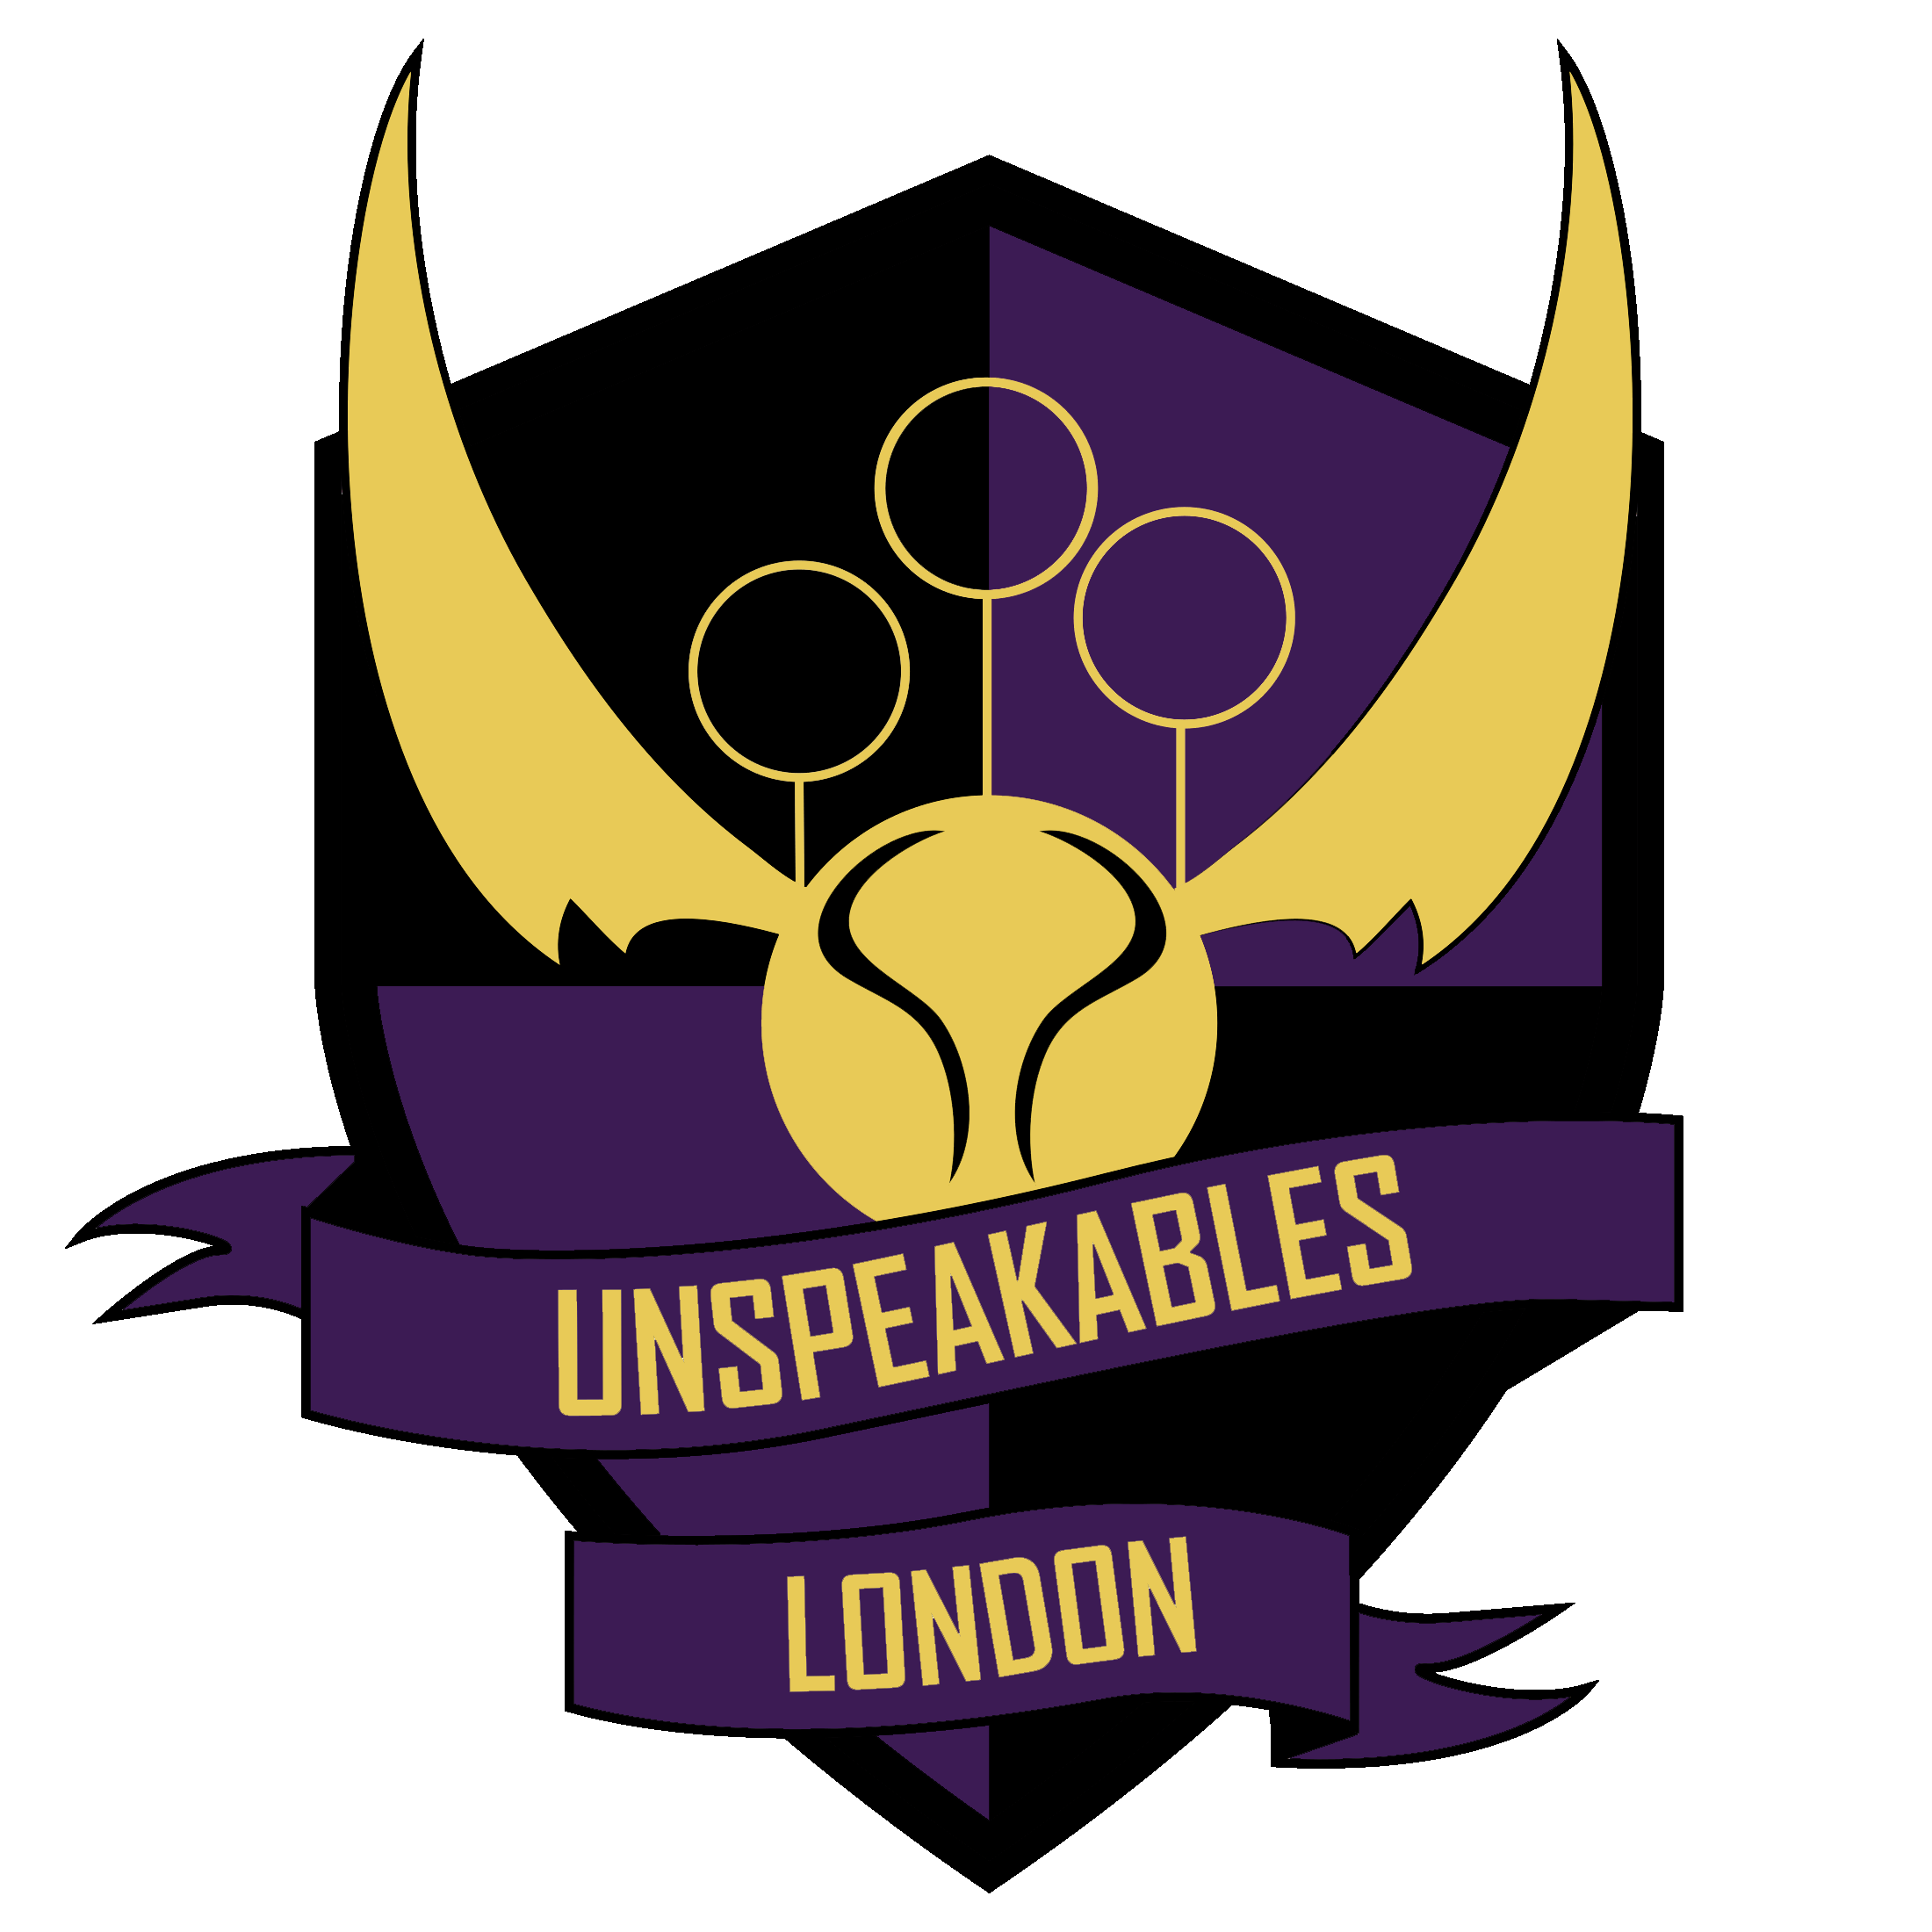 London Unspeakables Quadball logo